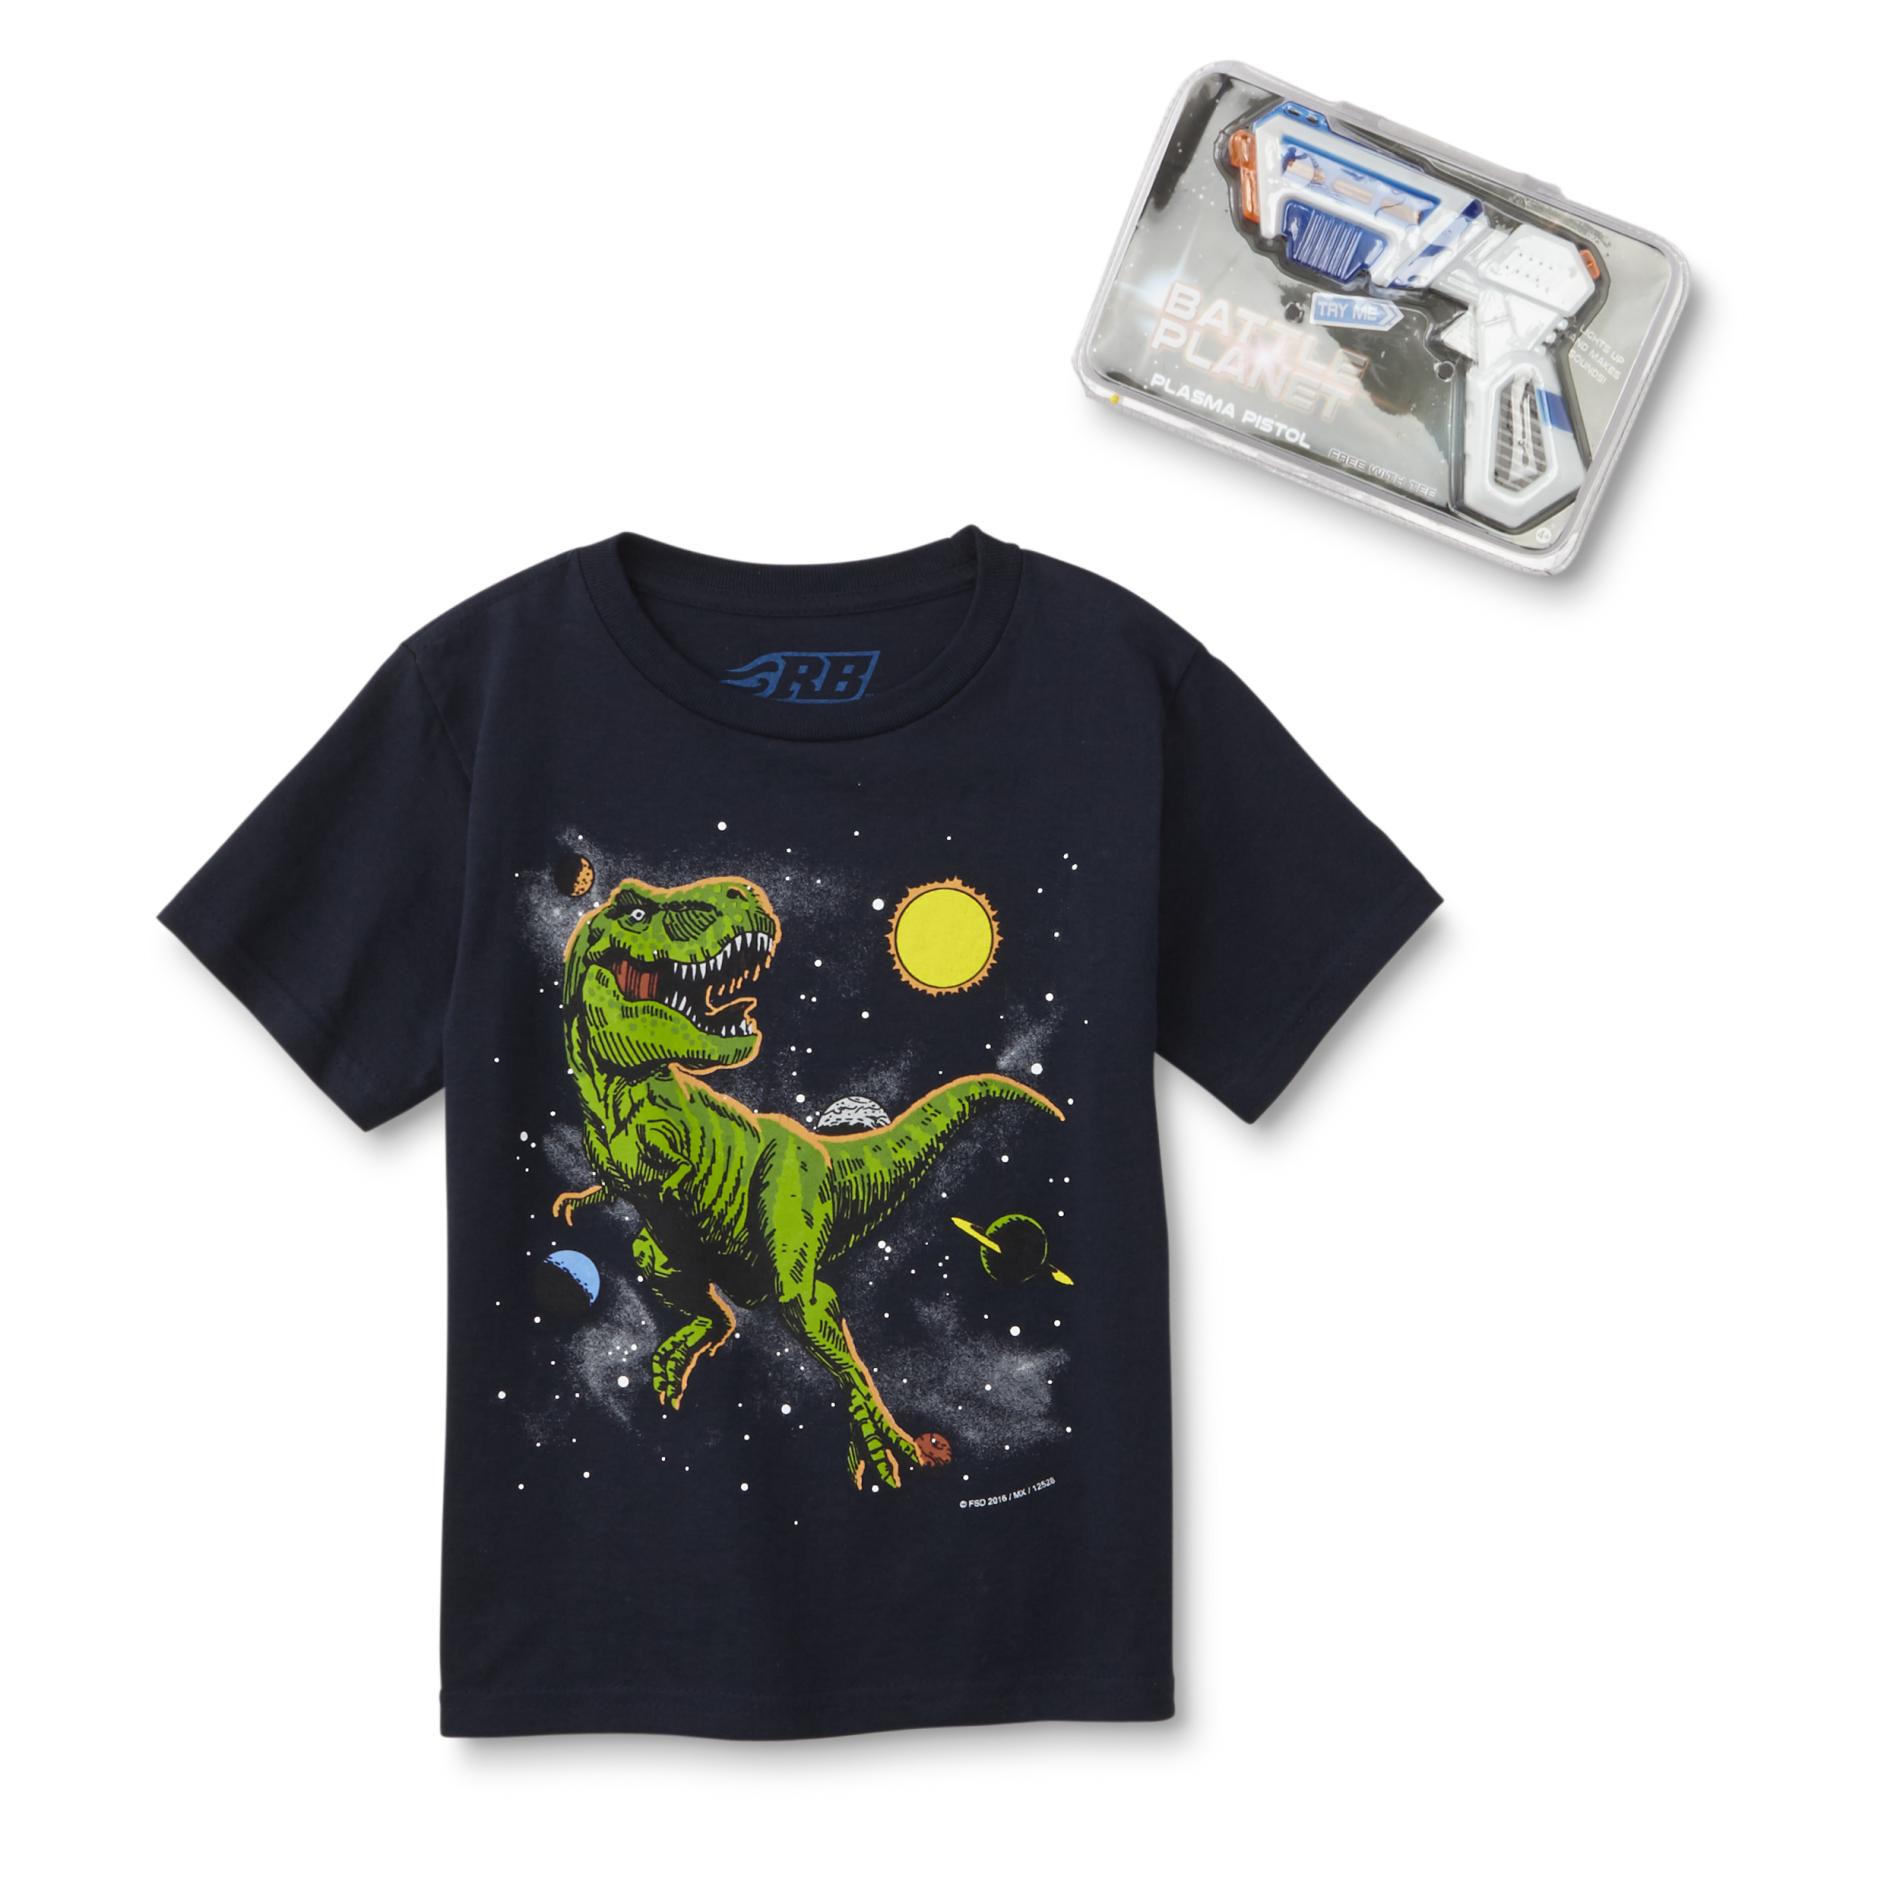 Rudeboyz Boys' Graphic T-Shirt & Toy - Space Dinosaur